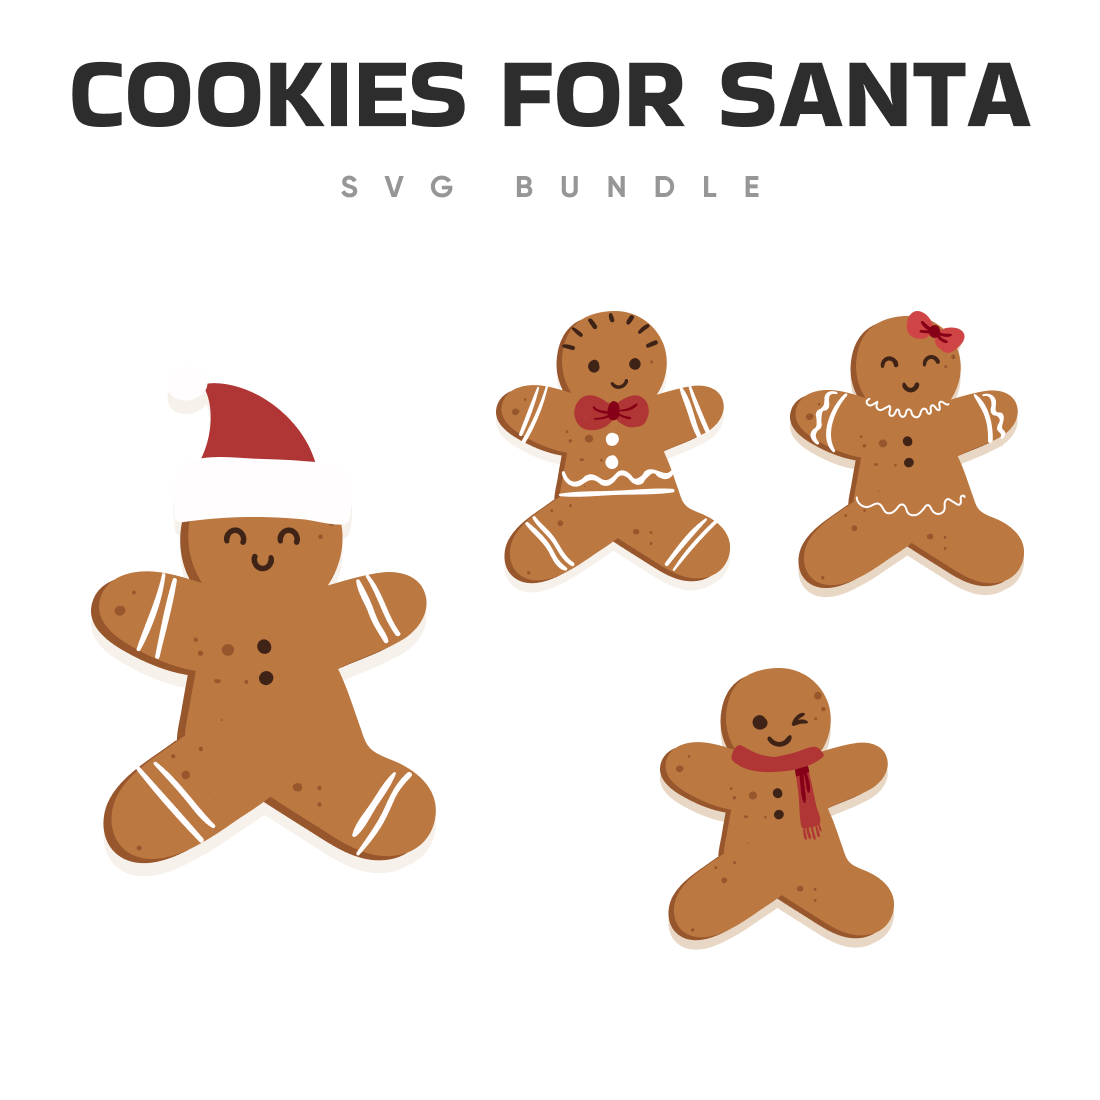 Cookies for santa svg.